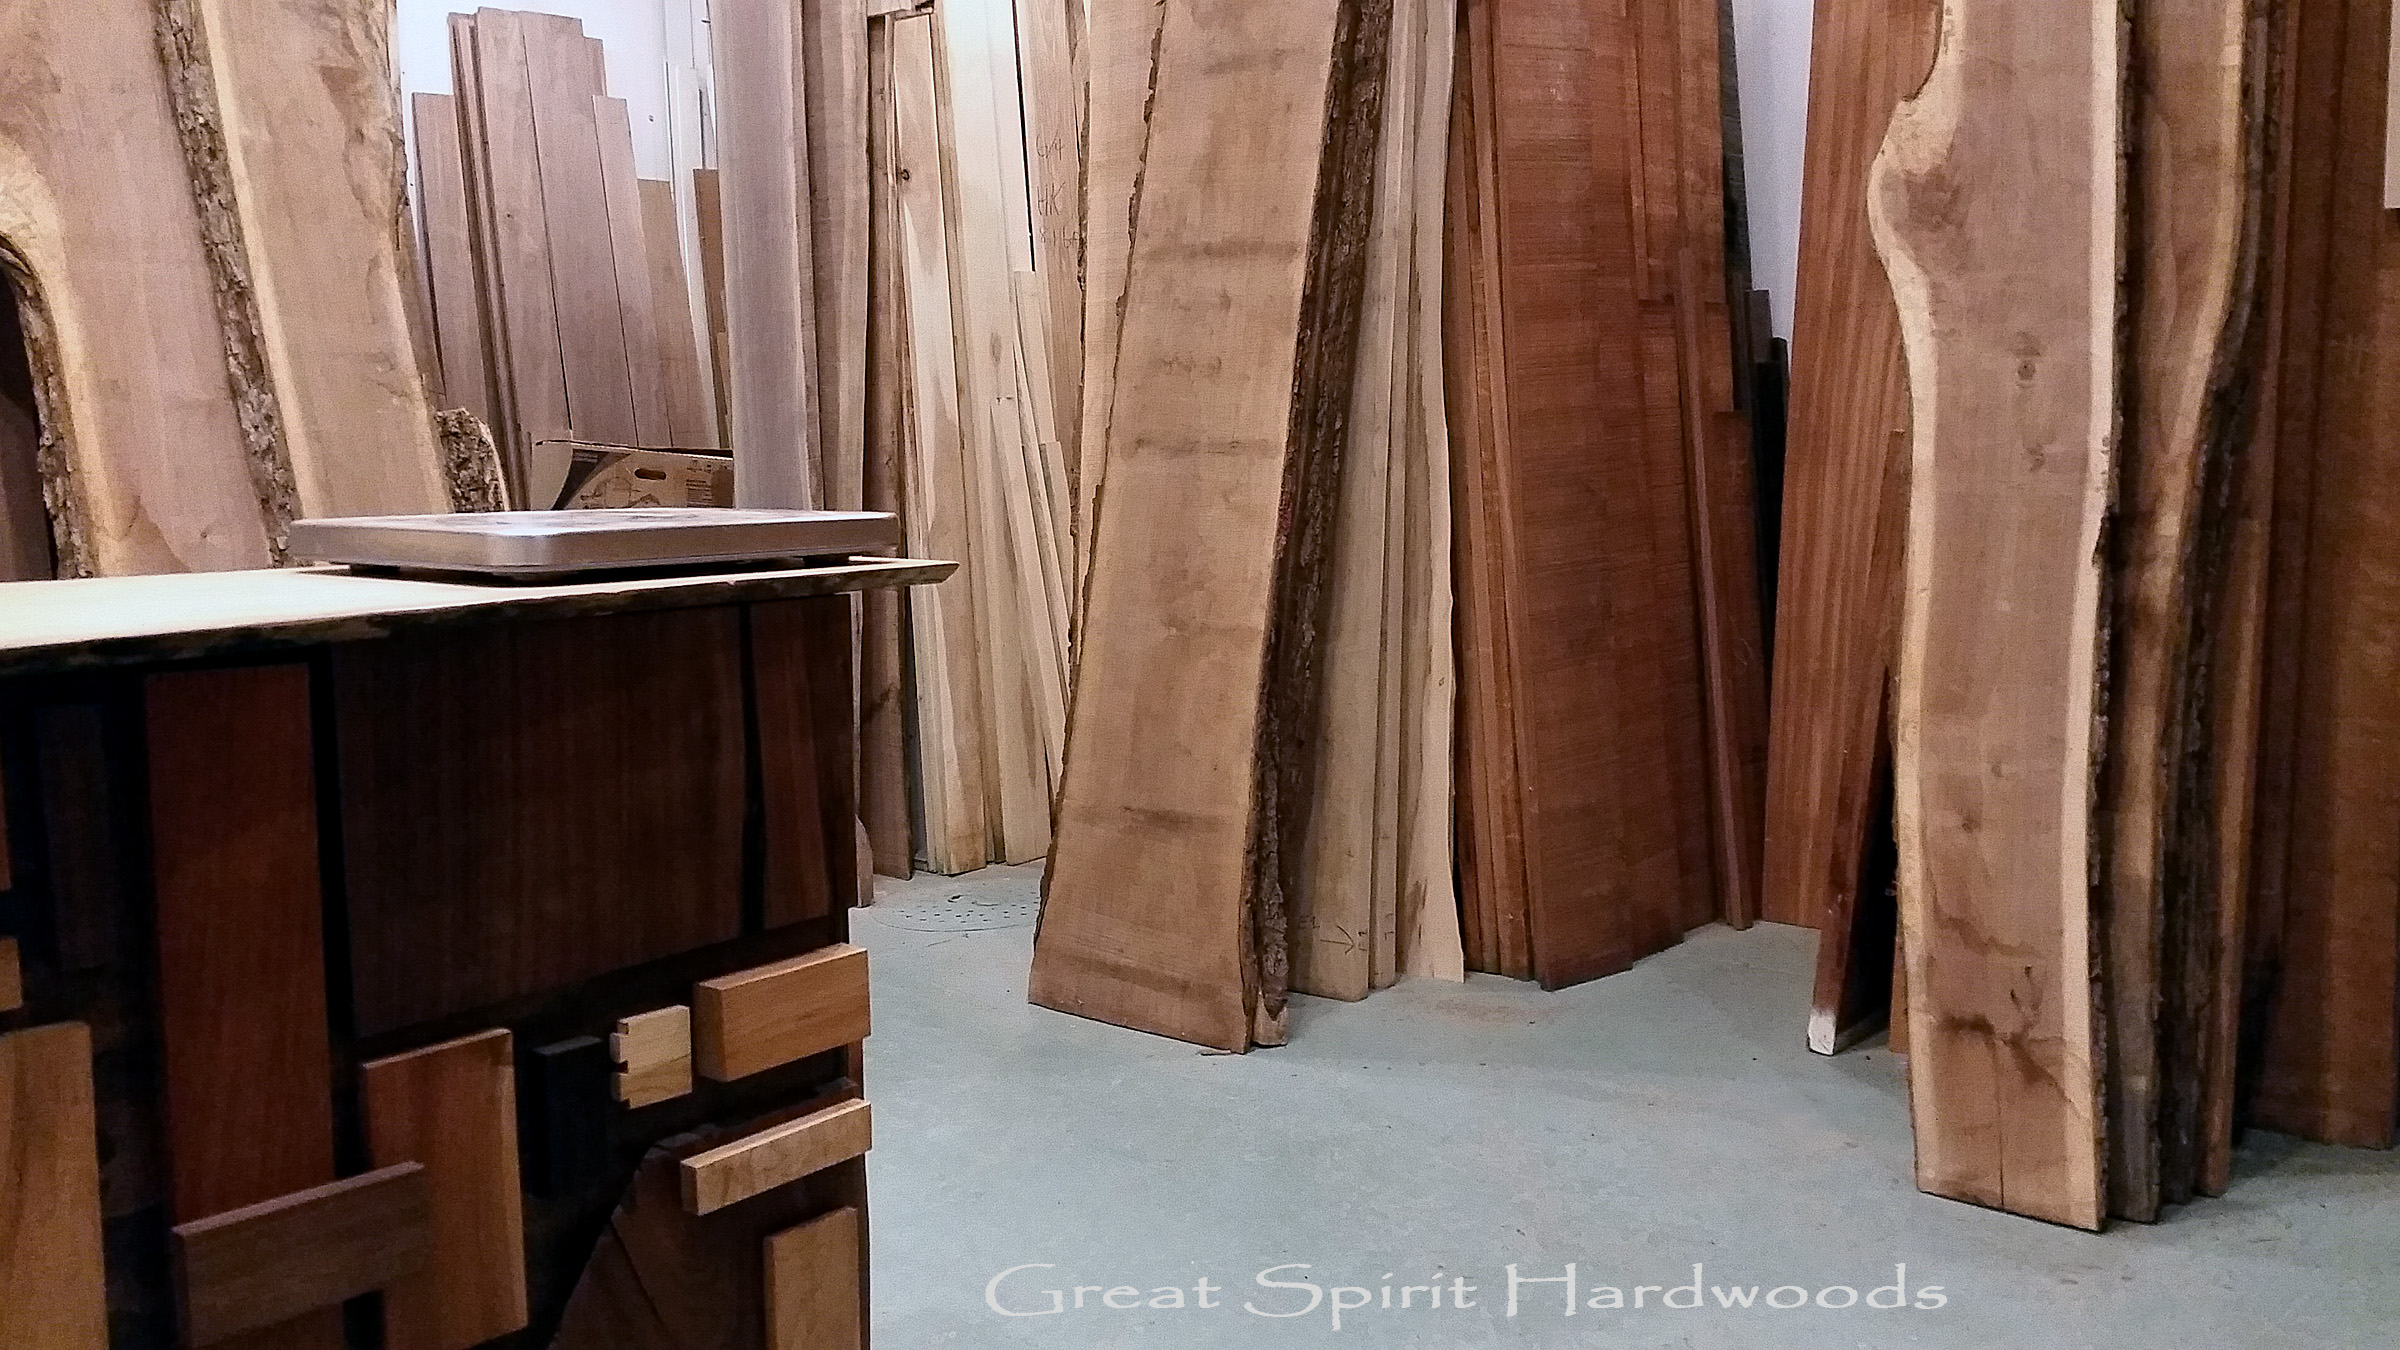 Hardwood Lumber Store, Great Spirit Hardwoods in Dundee, IL